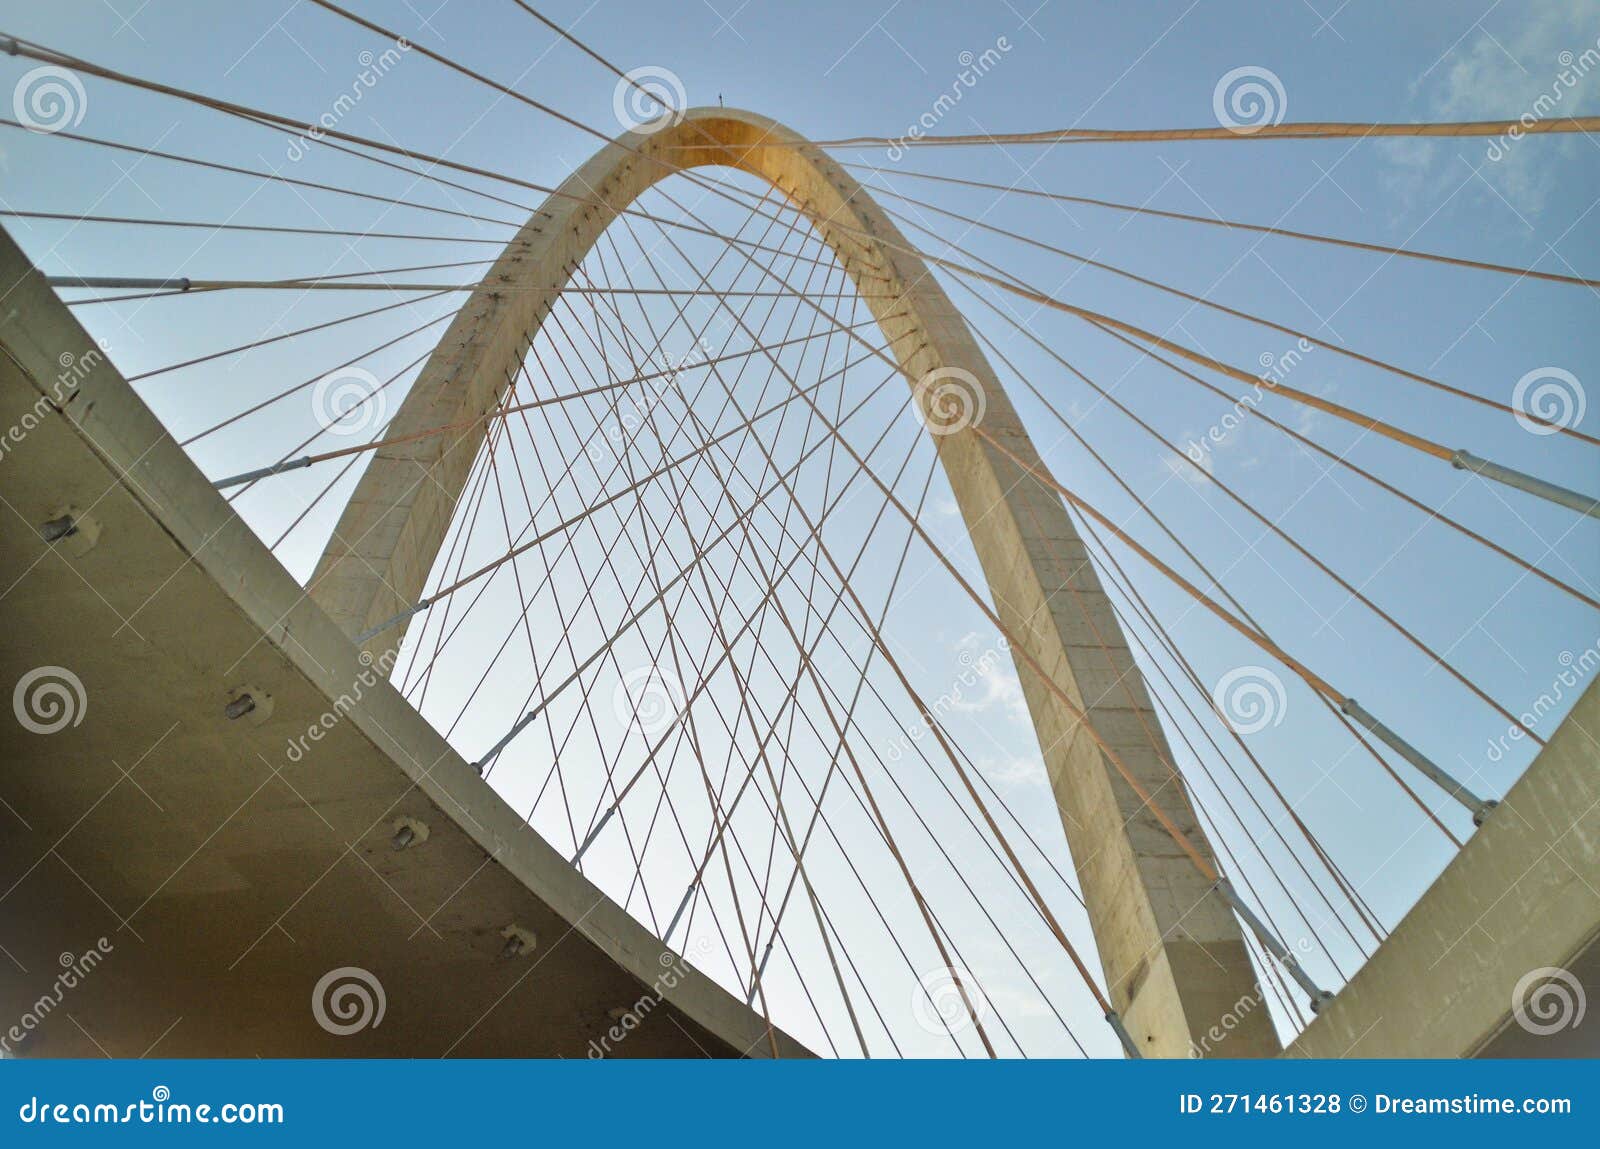 underneath view of the arco da innovation taiada bridge